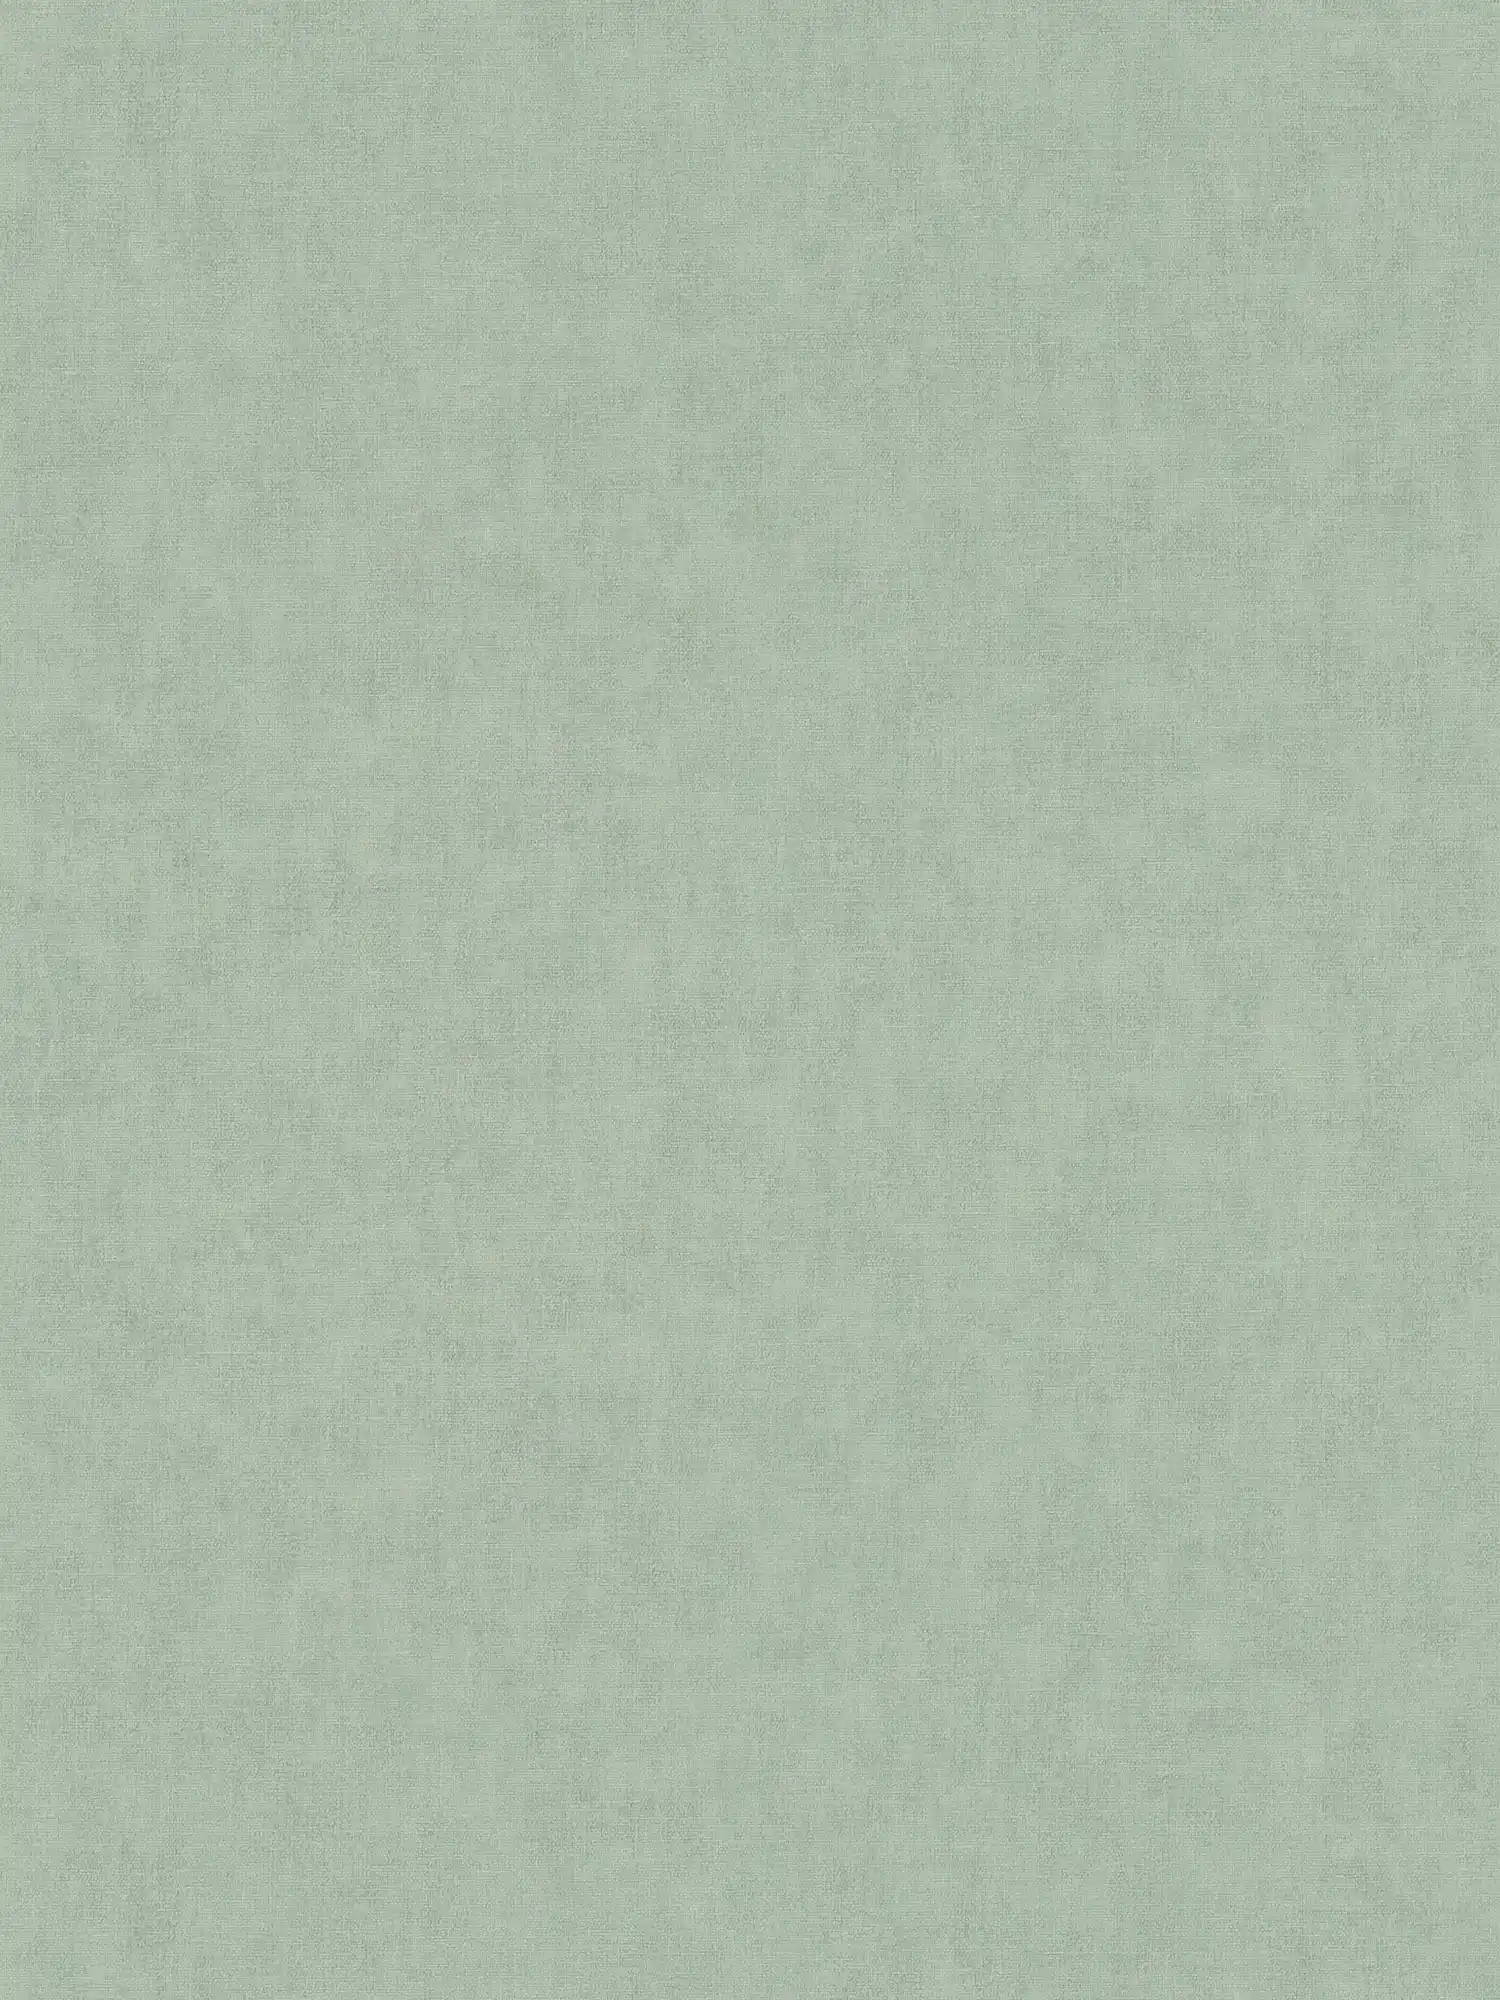 Vliestapete Textil-Optik im Scandinavian Stil - Grau, Grün
